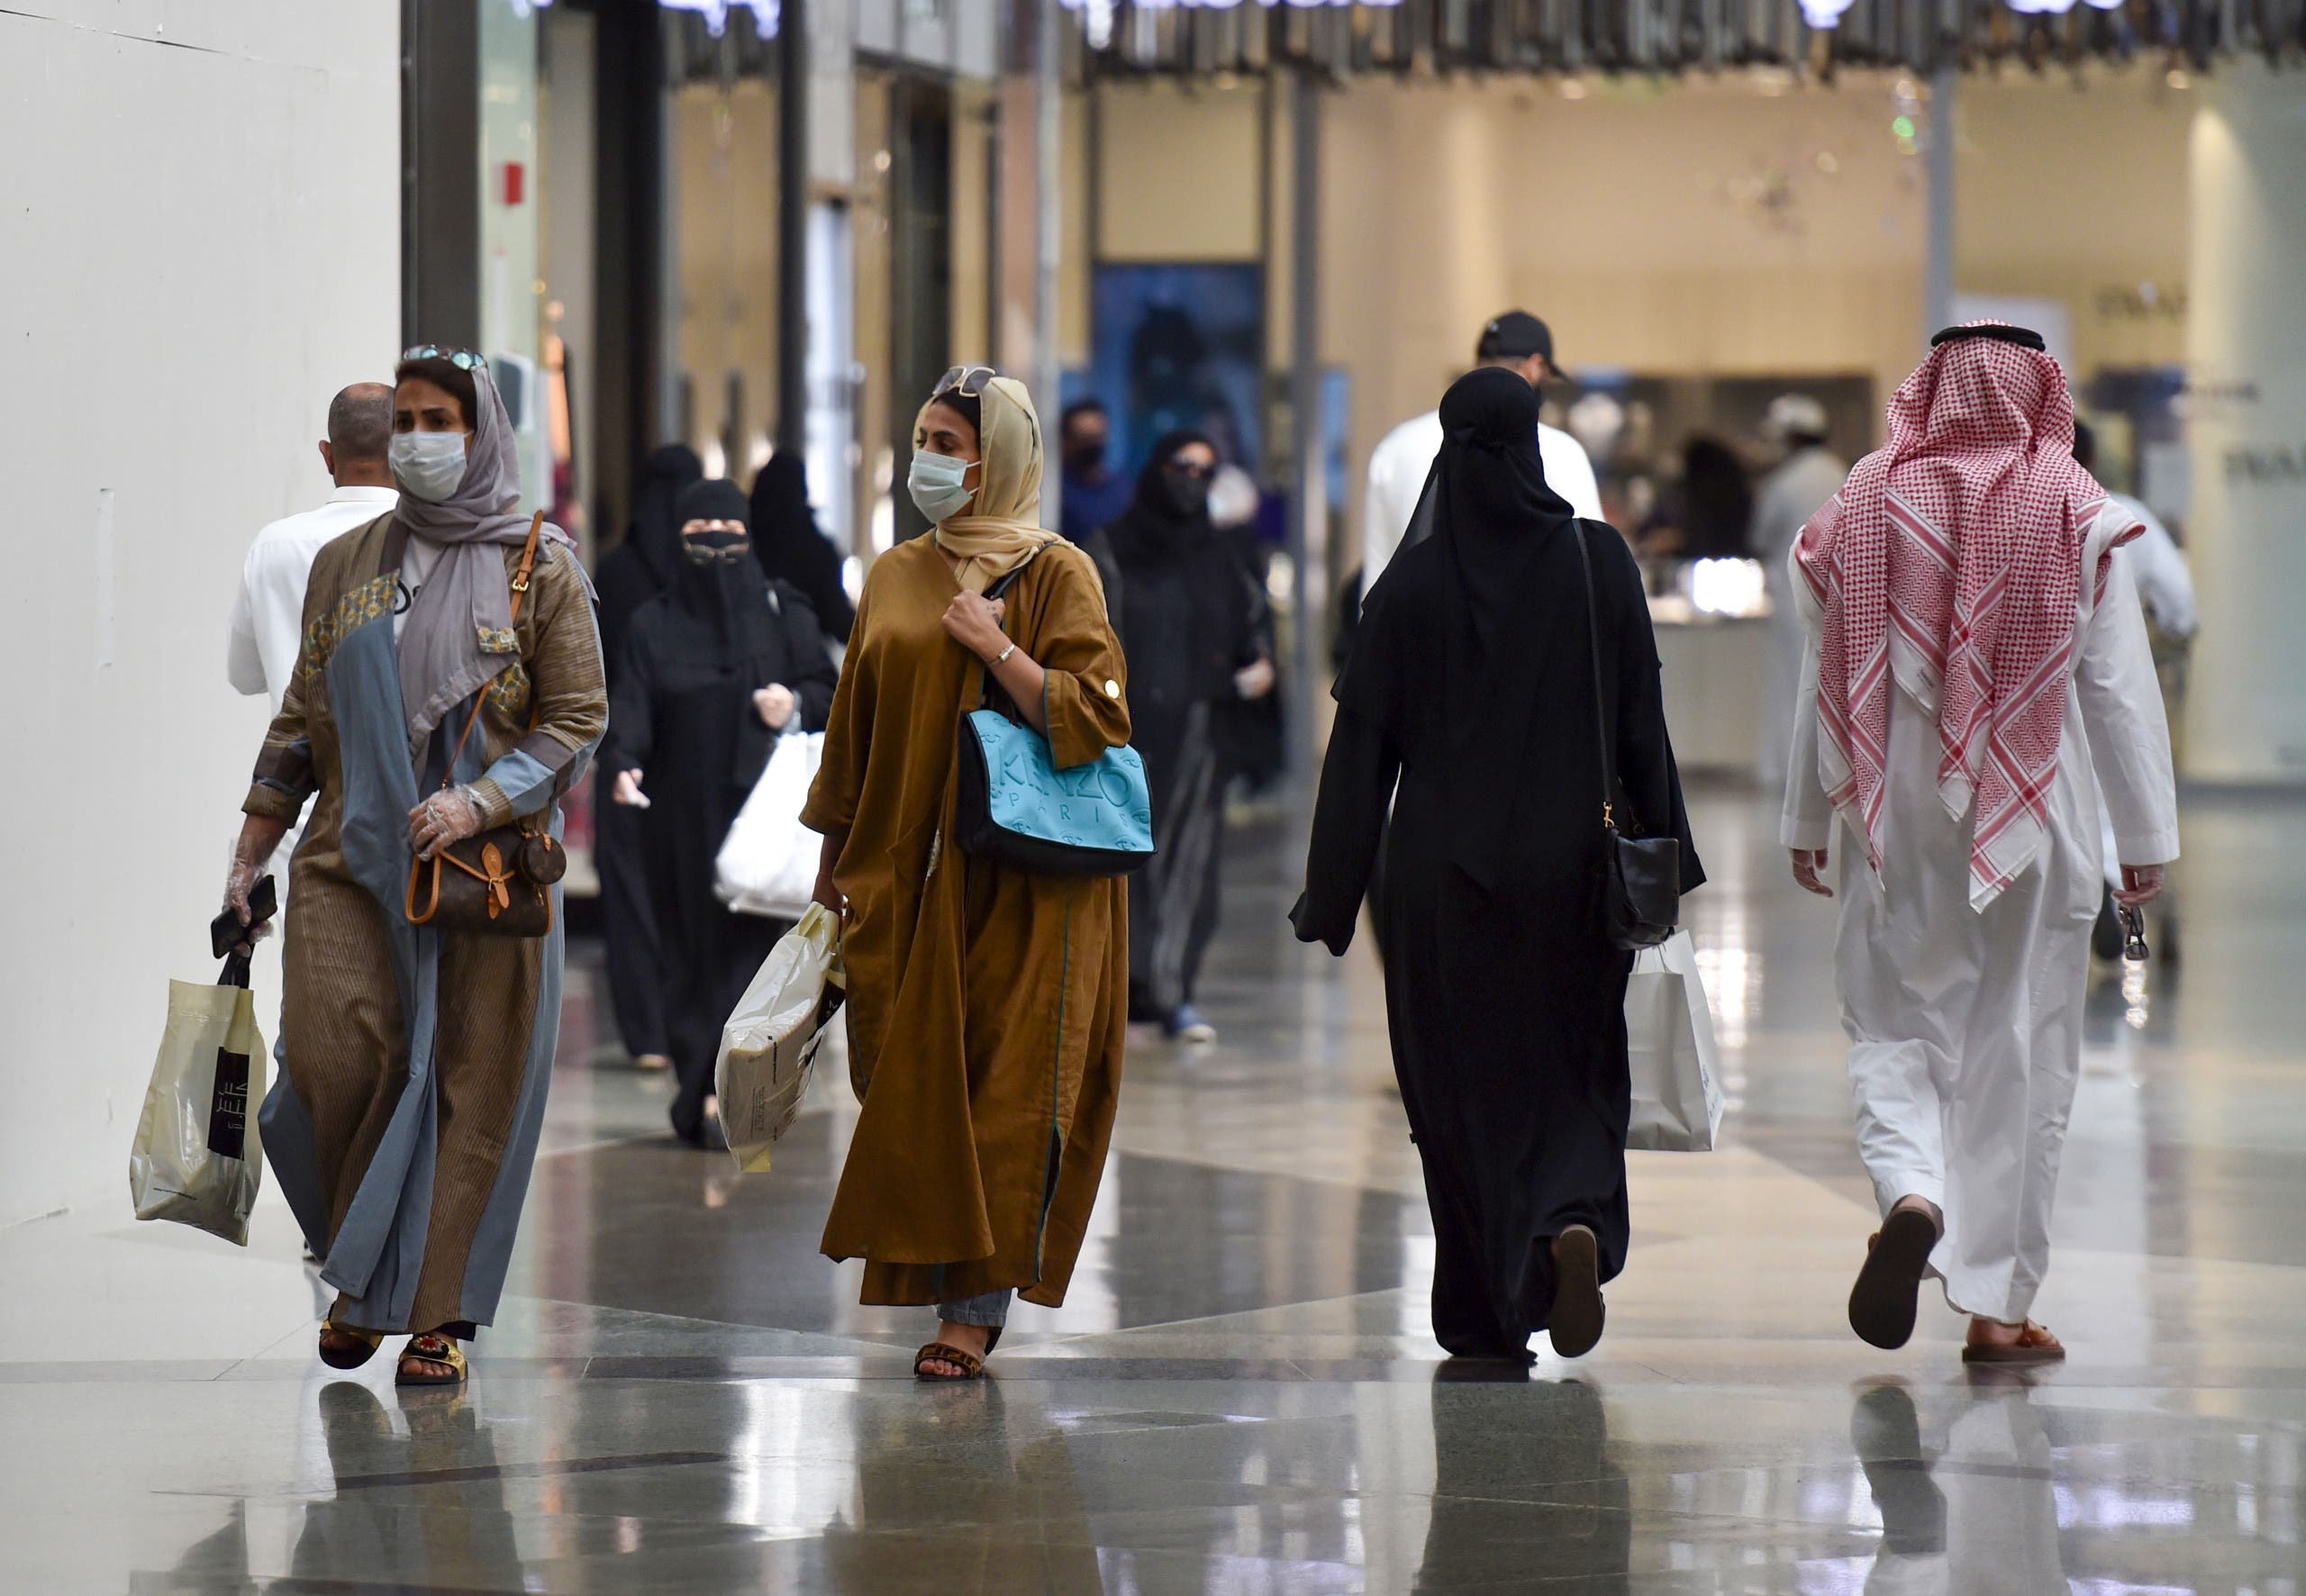 Saudis shop at the Panorama Mall in the capital Riyadh on May 22, 2020. (AFP)